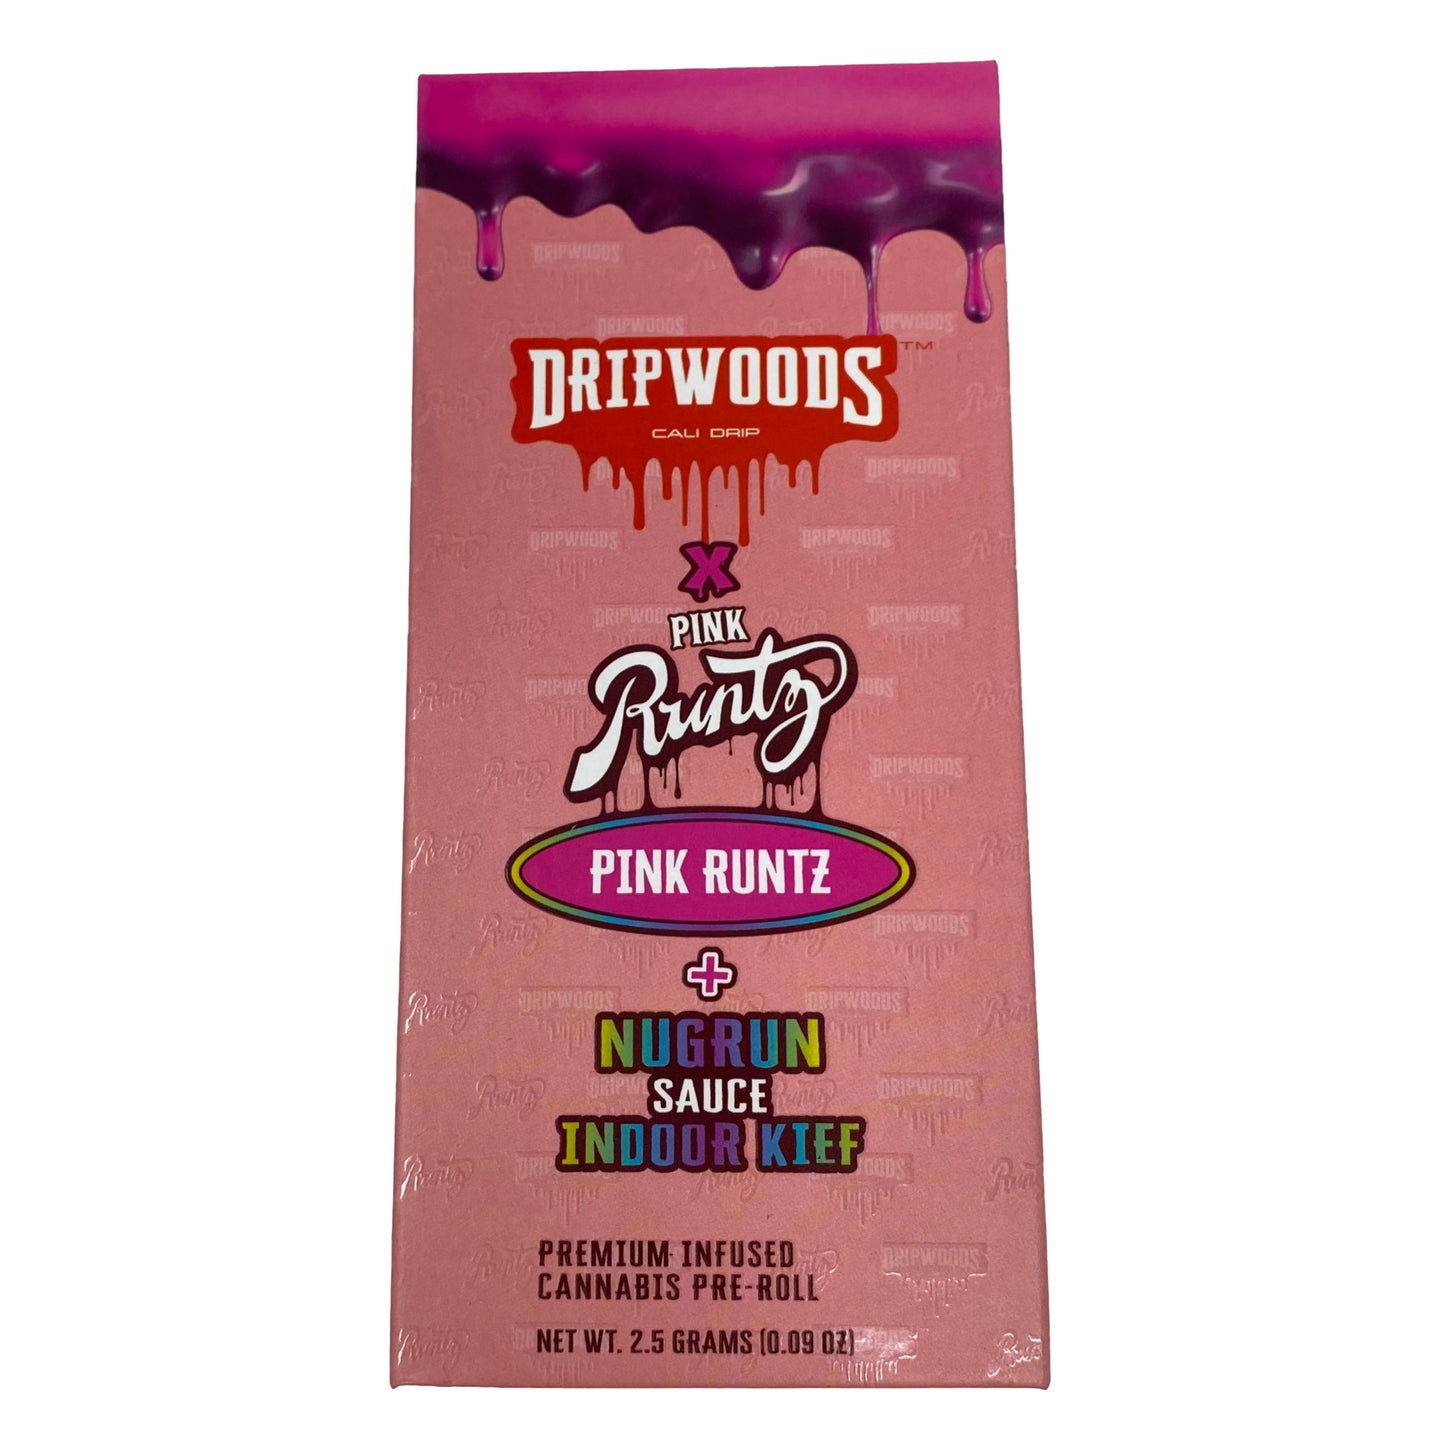 DripWoods X Pink Runtz Pre-roll Tube Packaging